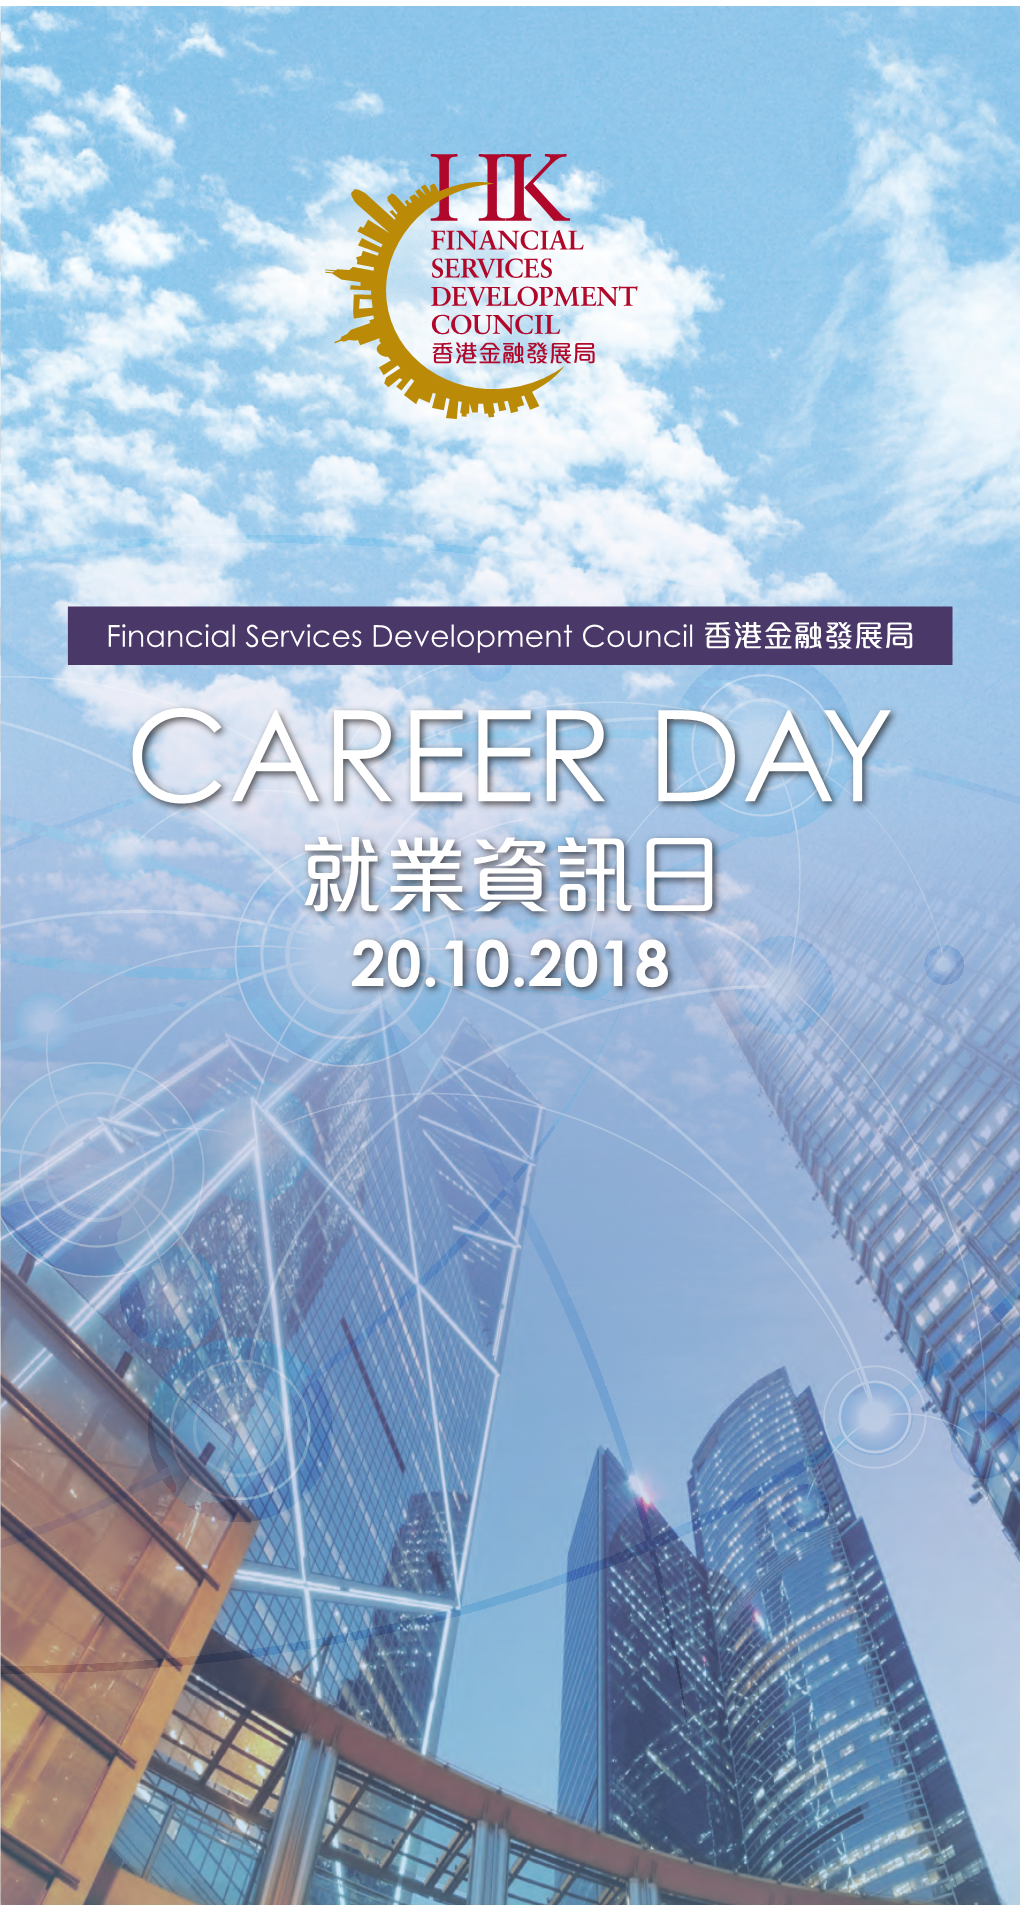 Career Day 就業資訊日 20.10.2018